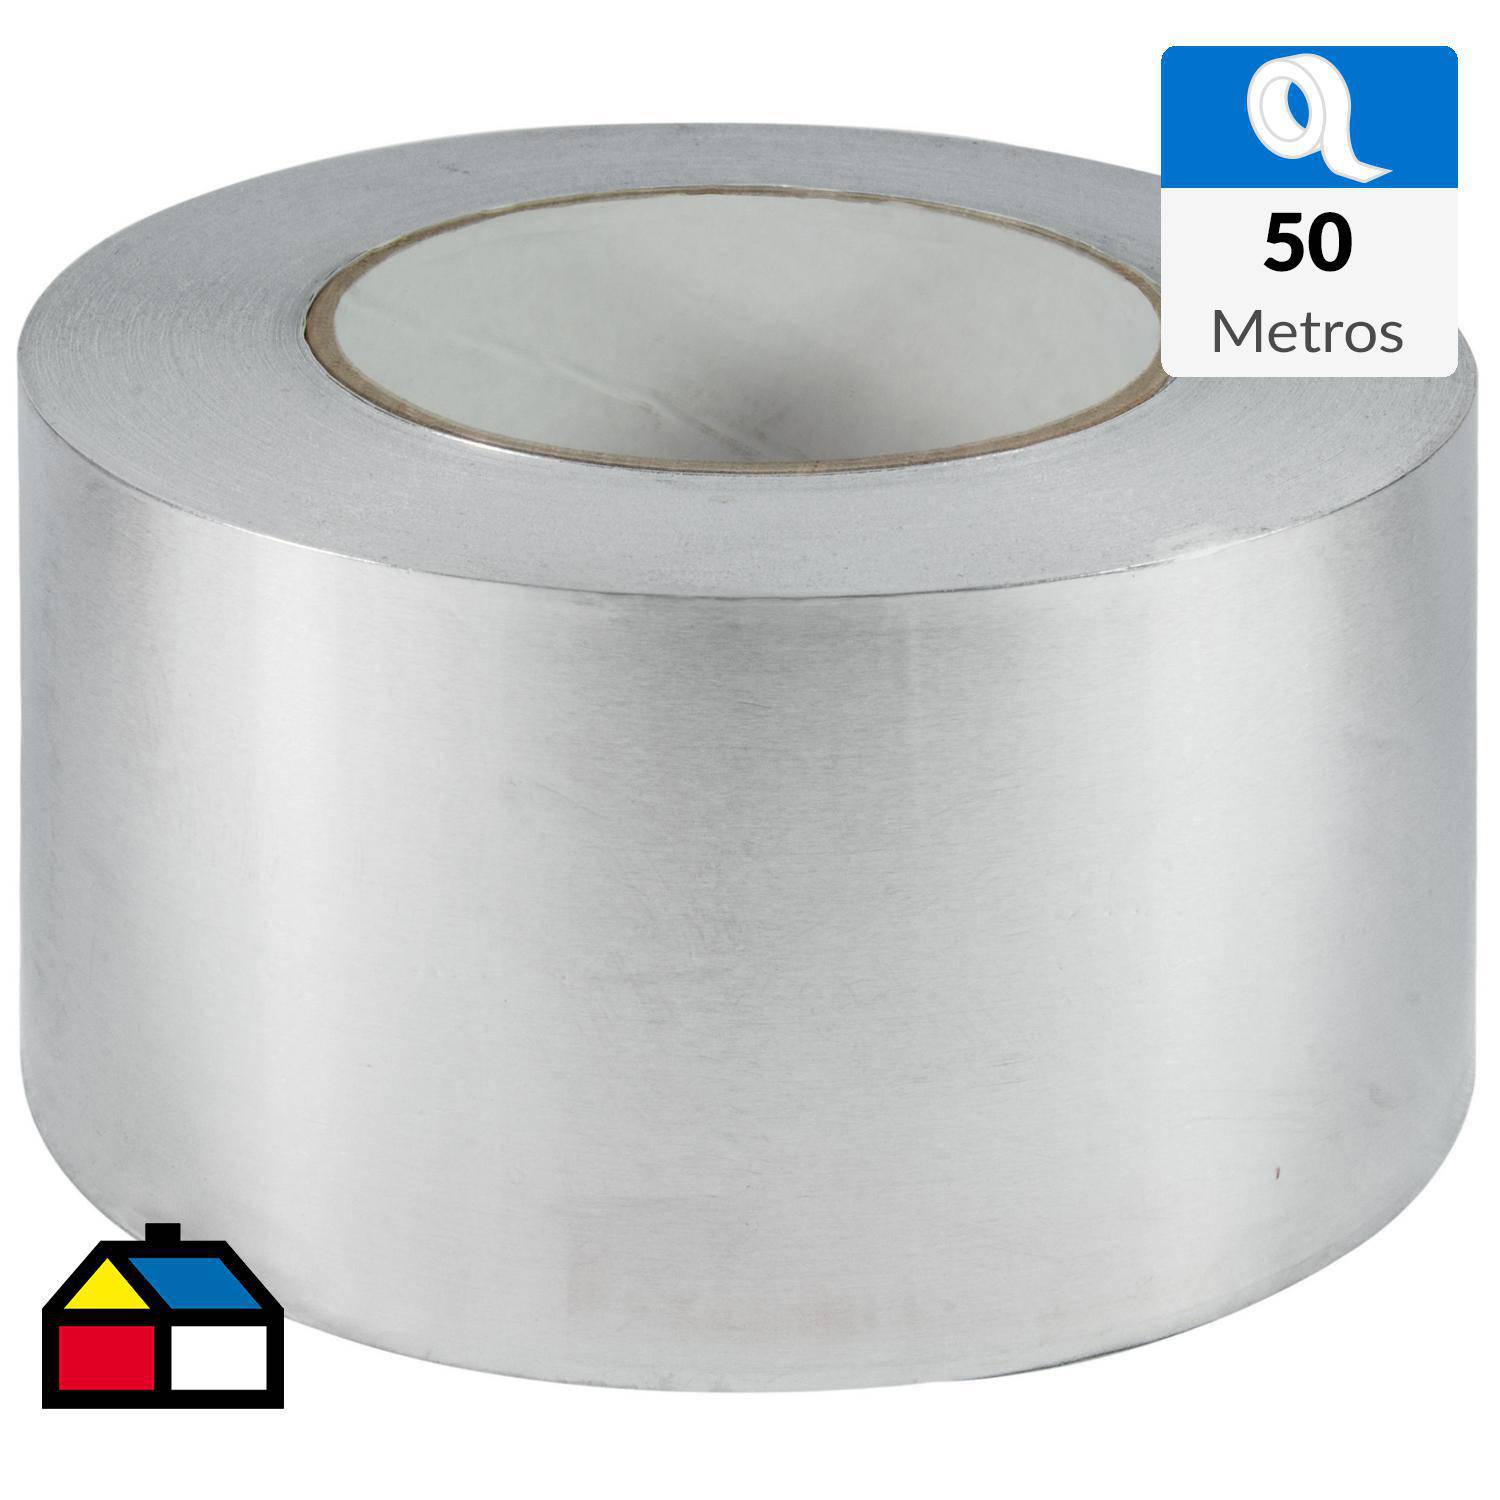 COLLAK Cinta Aluminio Adhesiva 50m x 75mm